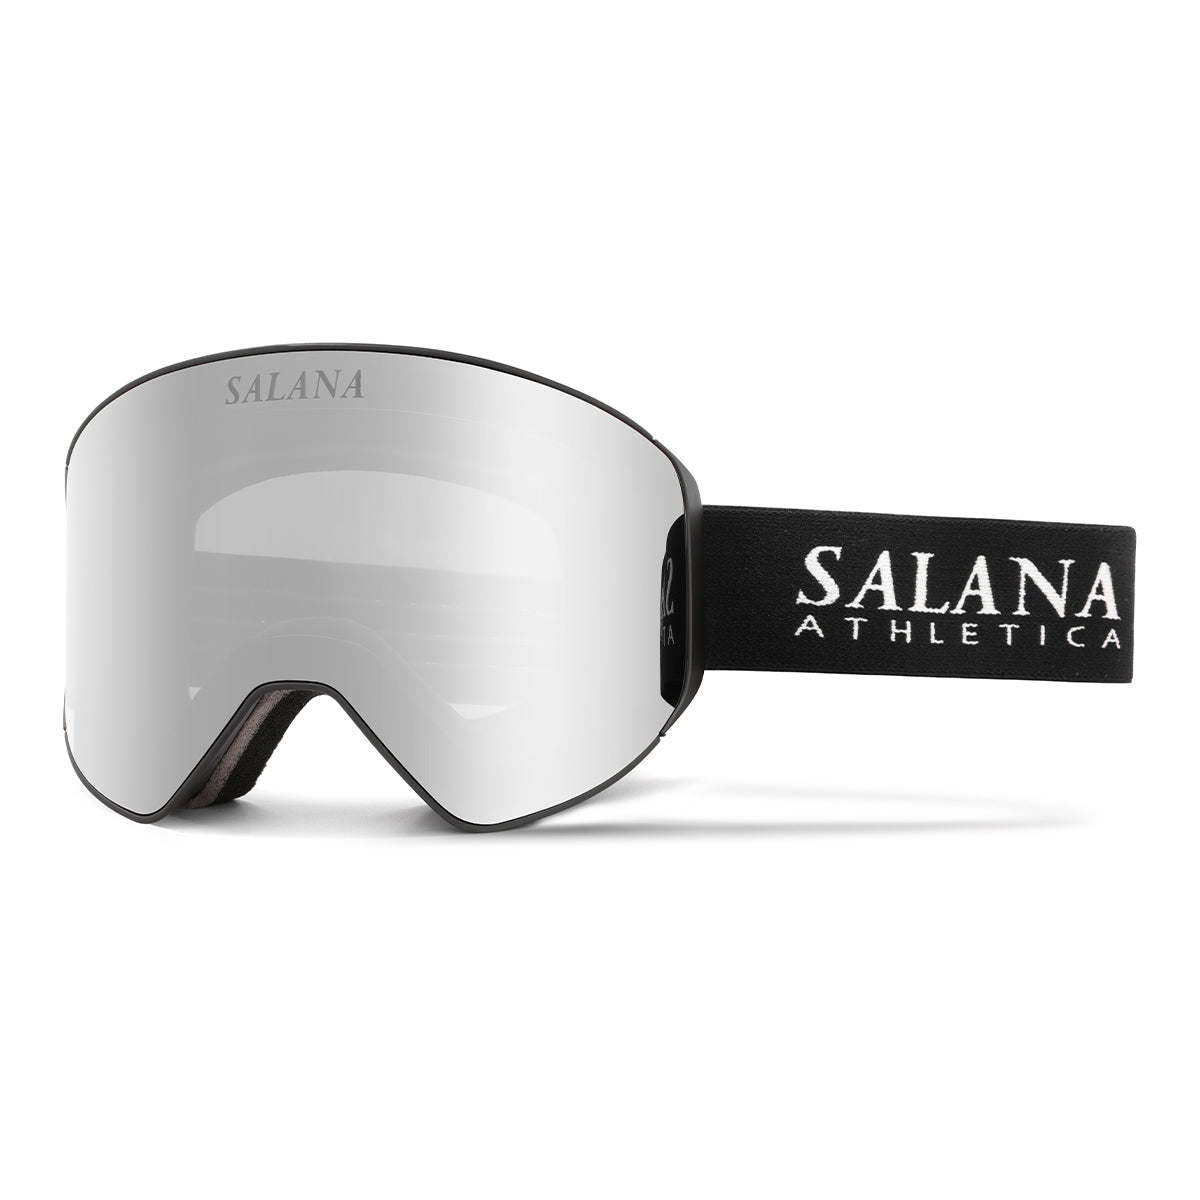 Salana ski snowboarding goggles thick elastic strap